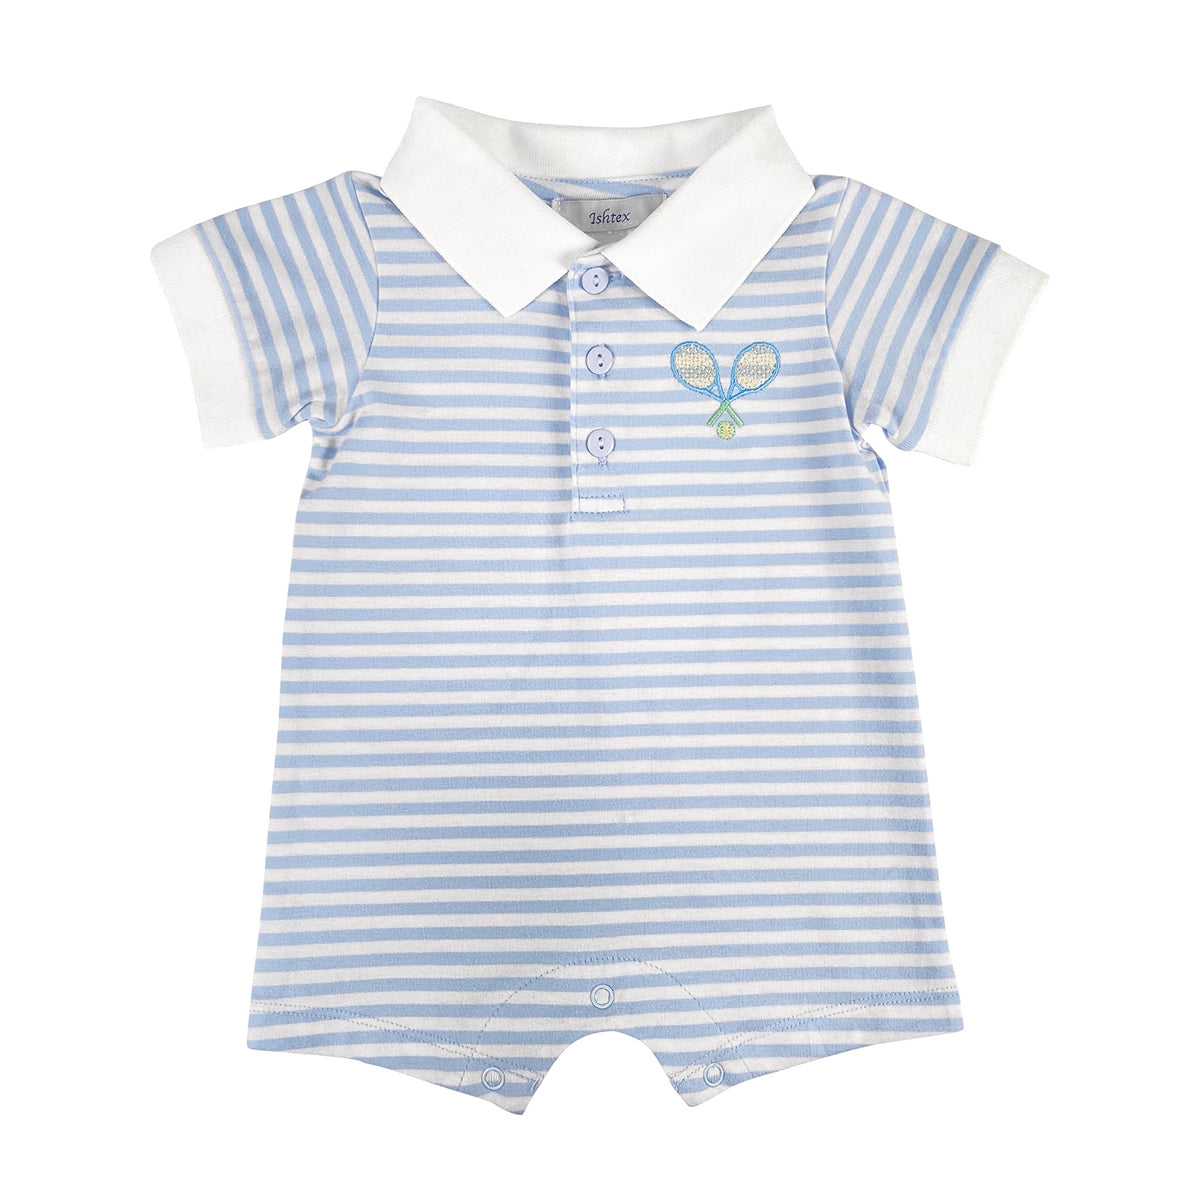 Baby Boy's Blue Stripes Knit Tennis Romper by Ishtex